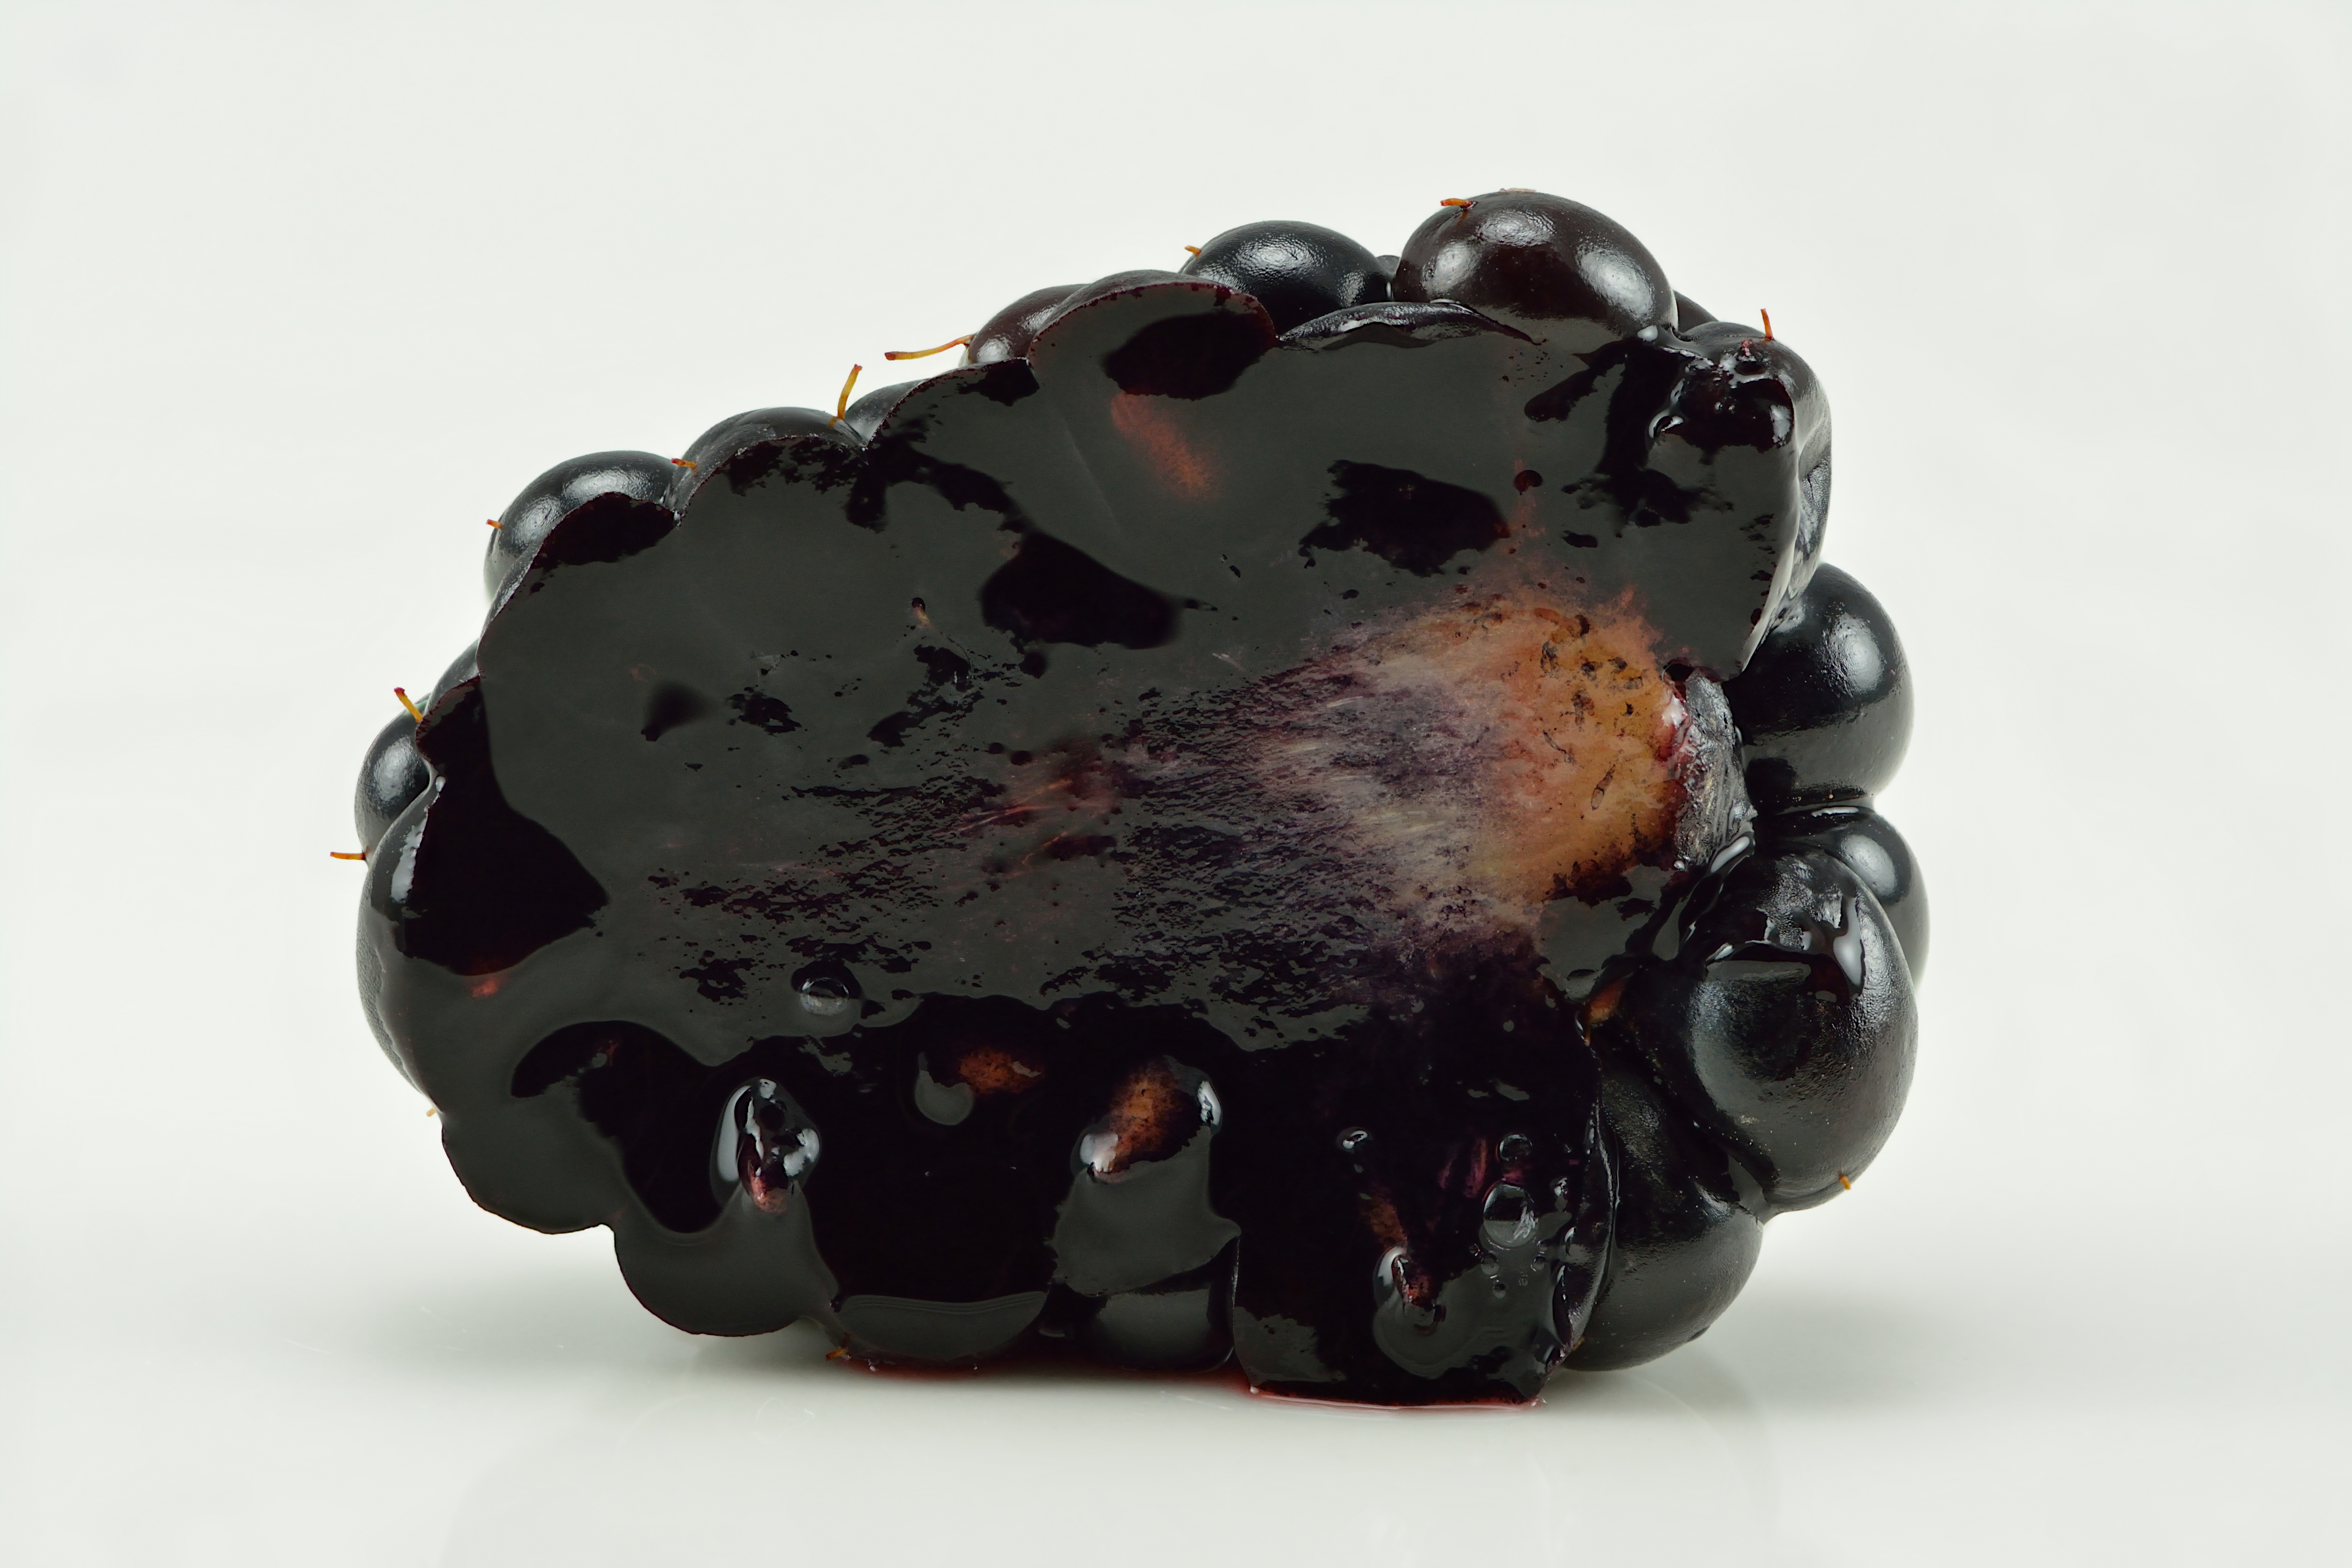 File:Halved blackberry (Rubus fruticosus).jpg - Wikipedia